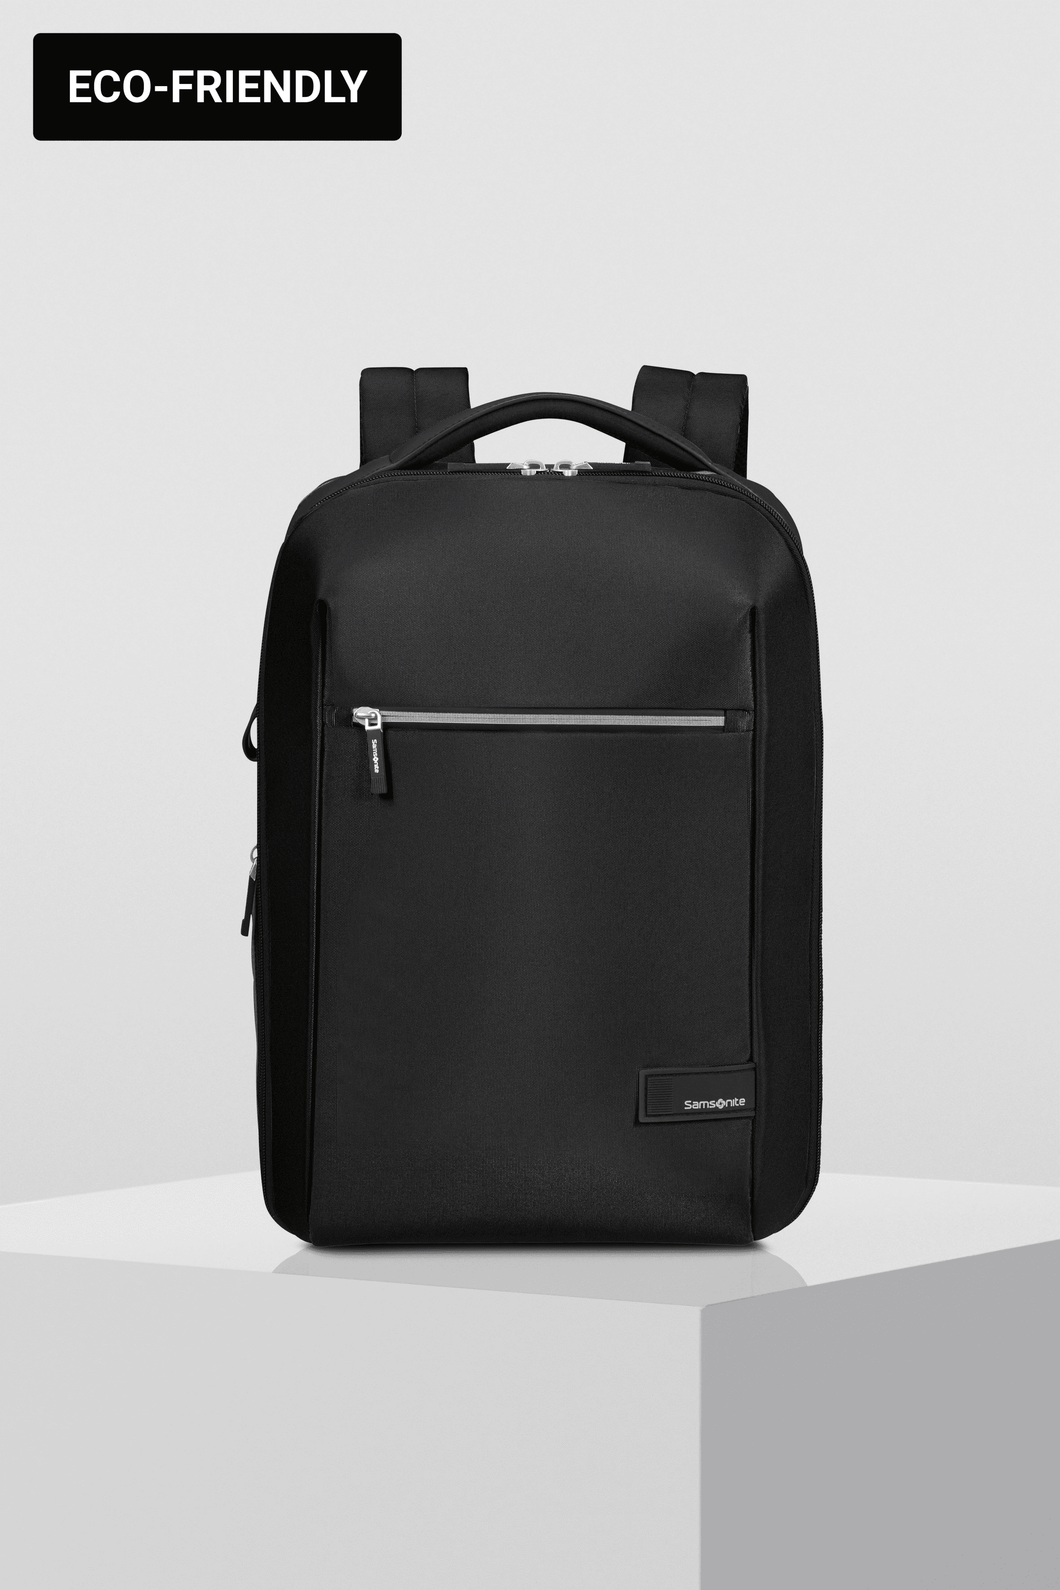 LITEPOINT Laptop Backpack 15.6